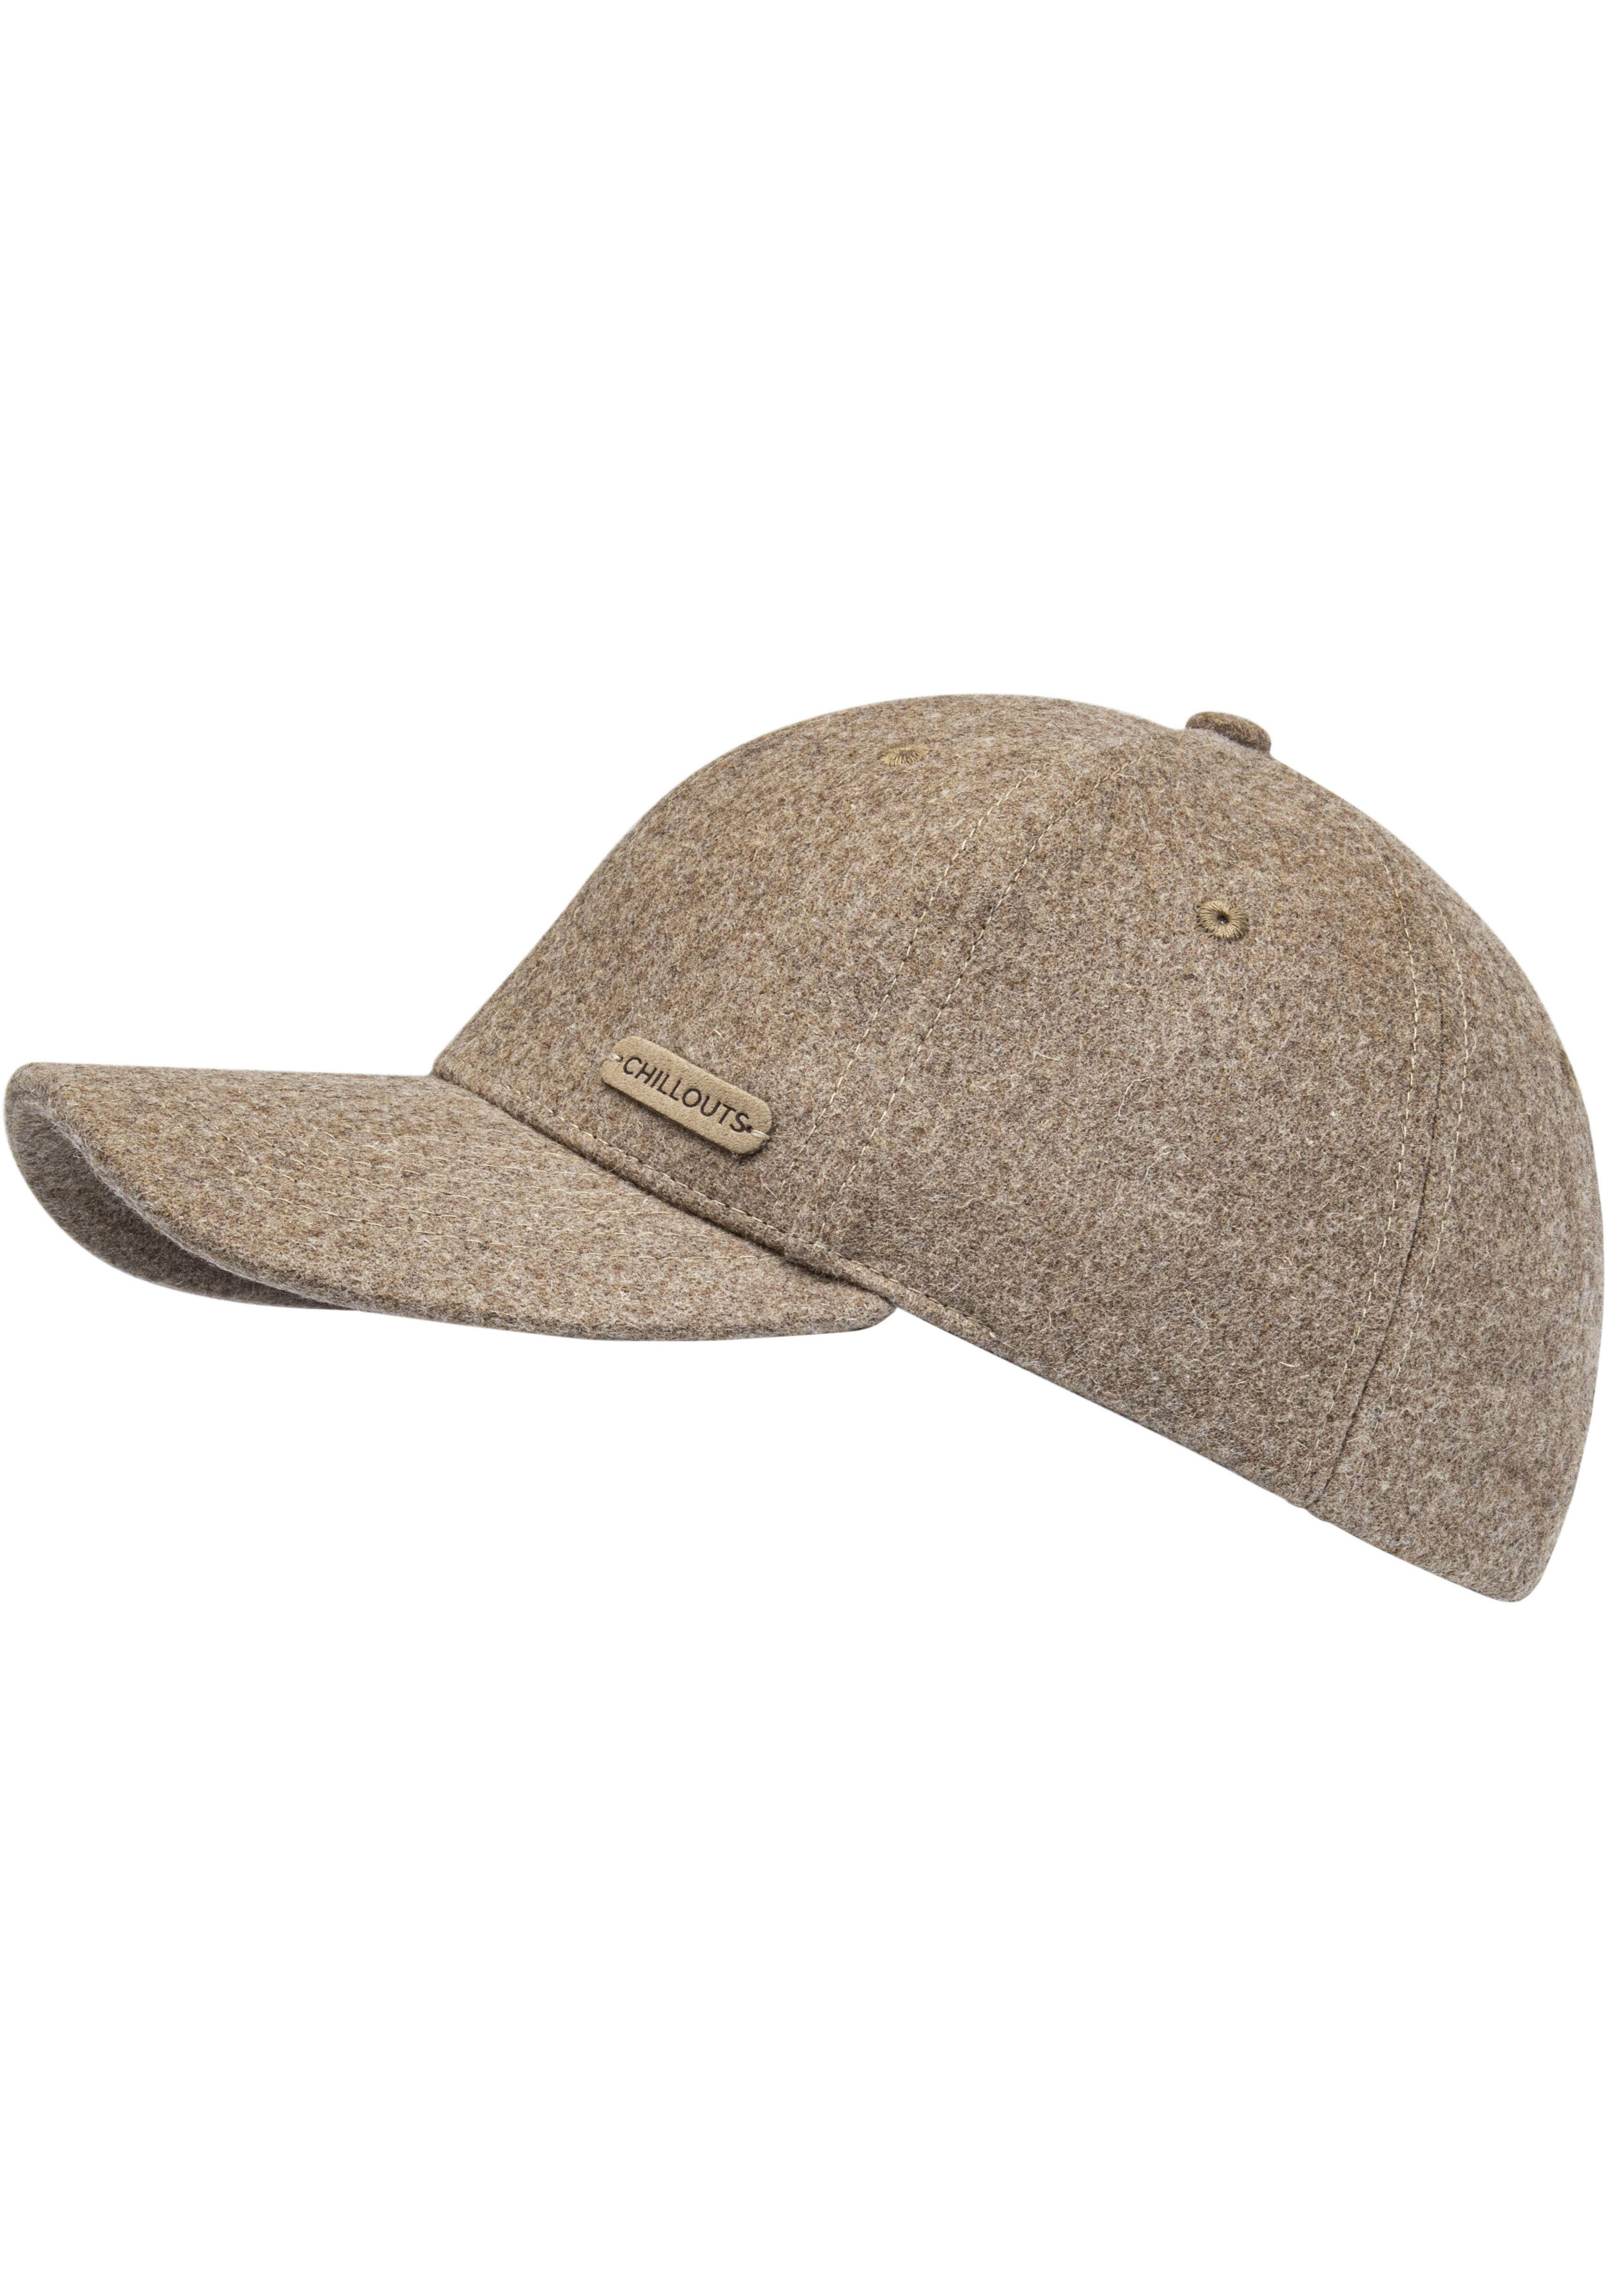 chillouts Baseball camel Cap Wasserabweisendes Material Mateo Hat